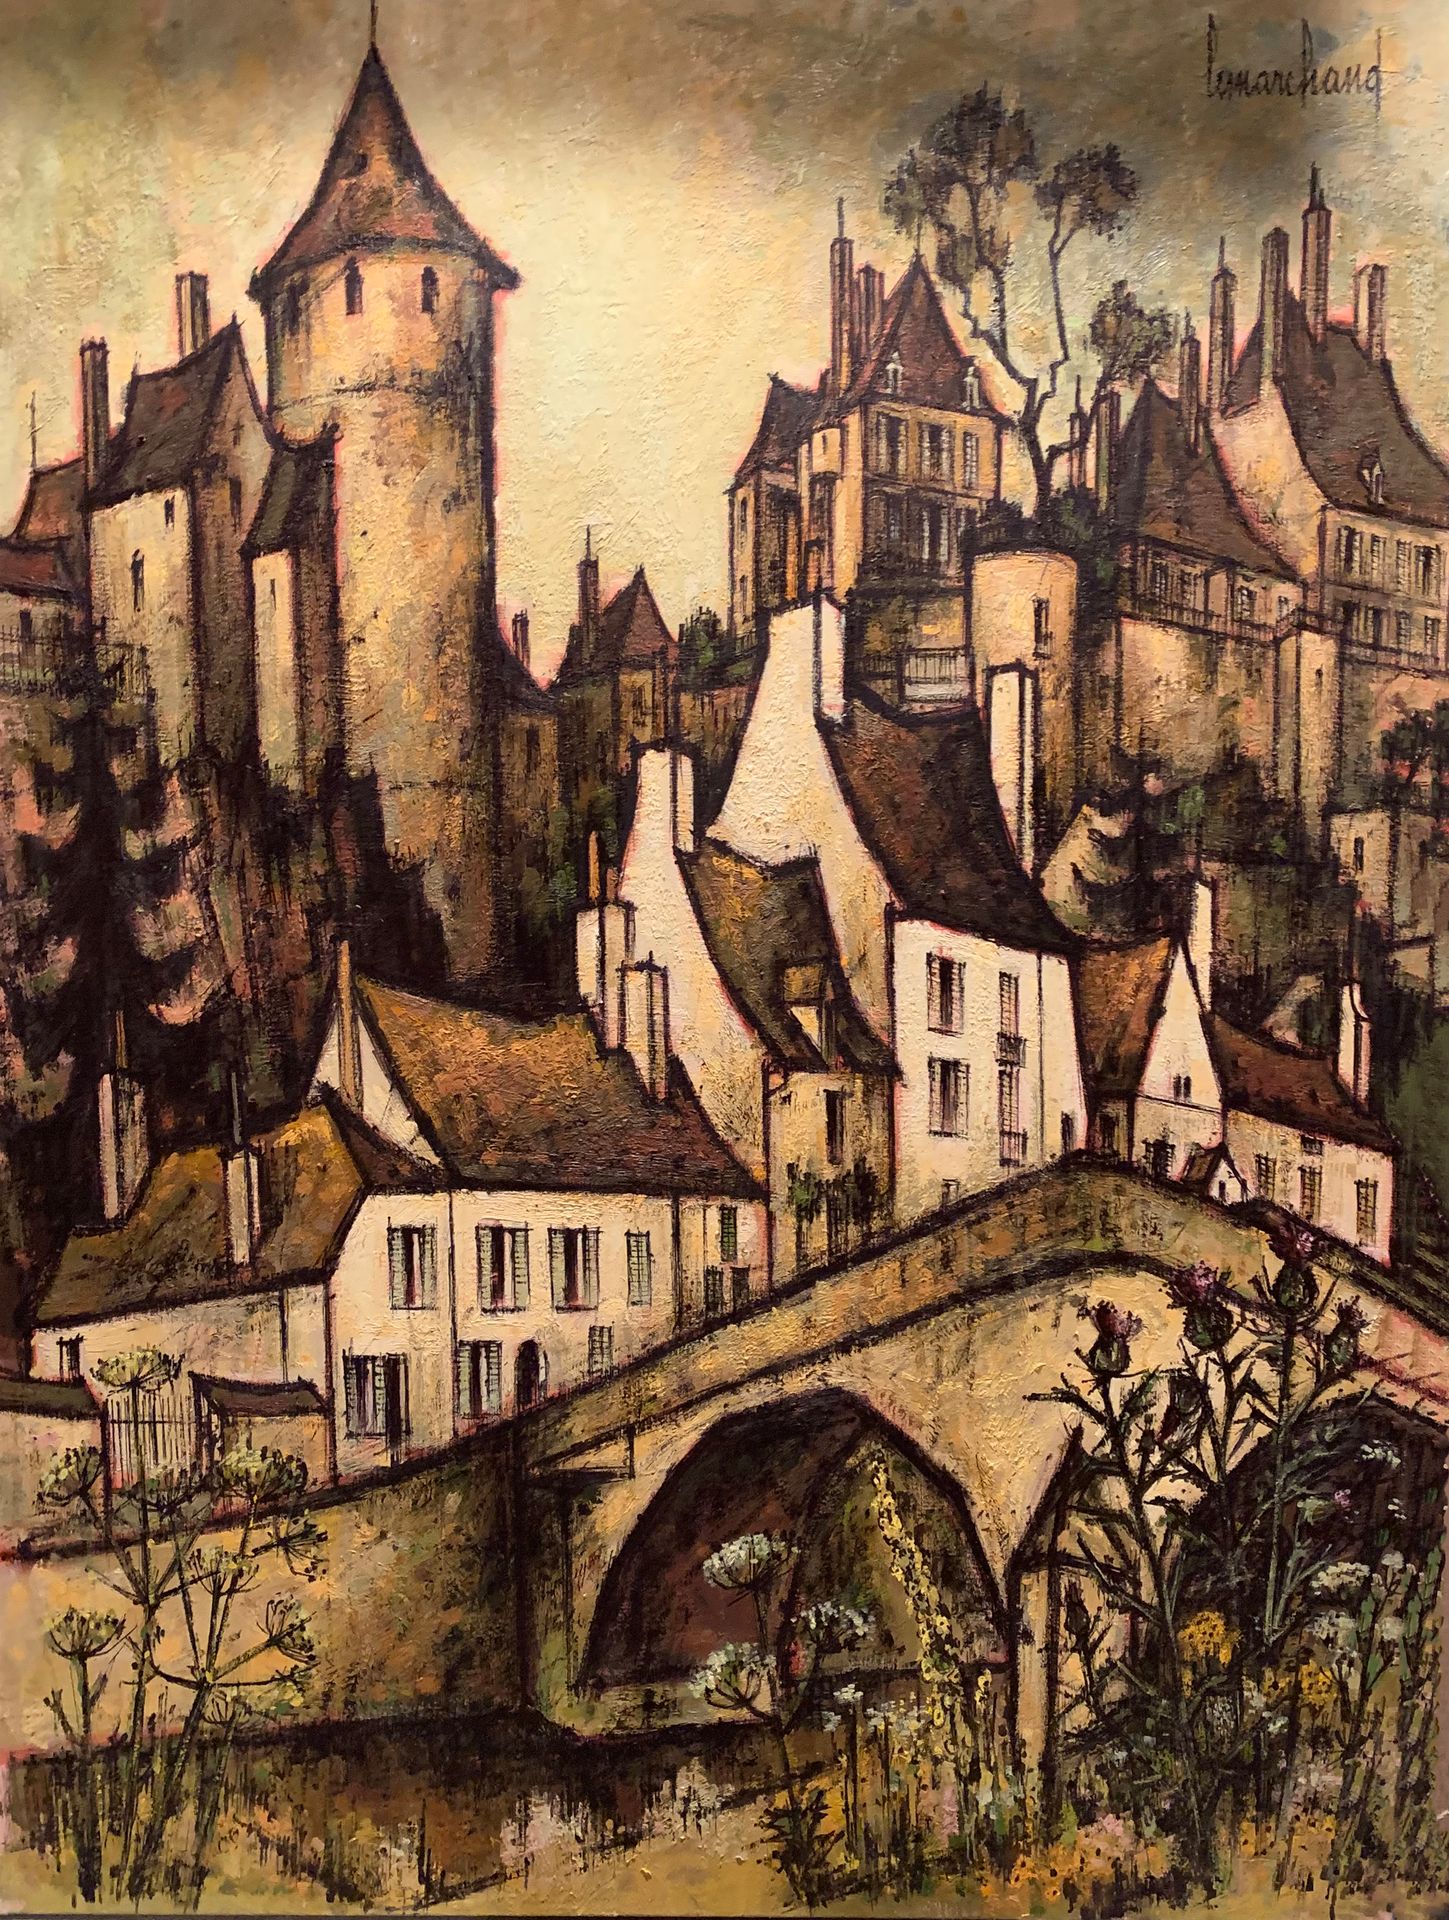 Null 皮埃尔-莱马赫德 (1906-1970)

从桥上看塞穆尔

布面油画，左上角有签名

130 x 97厘米。